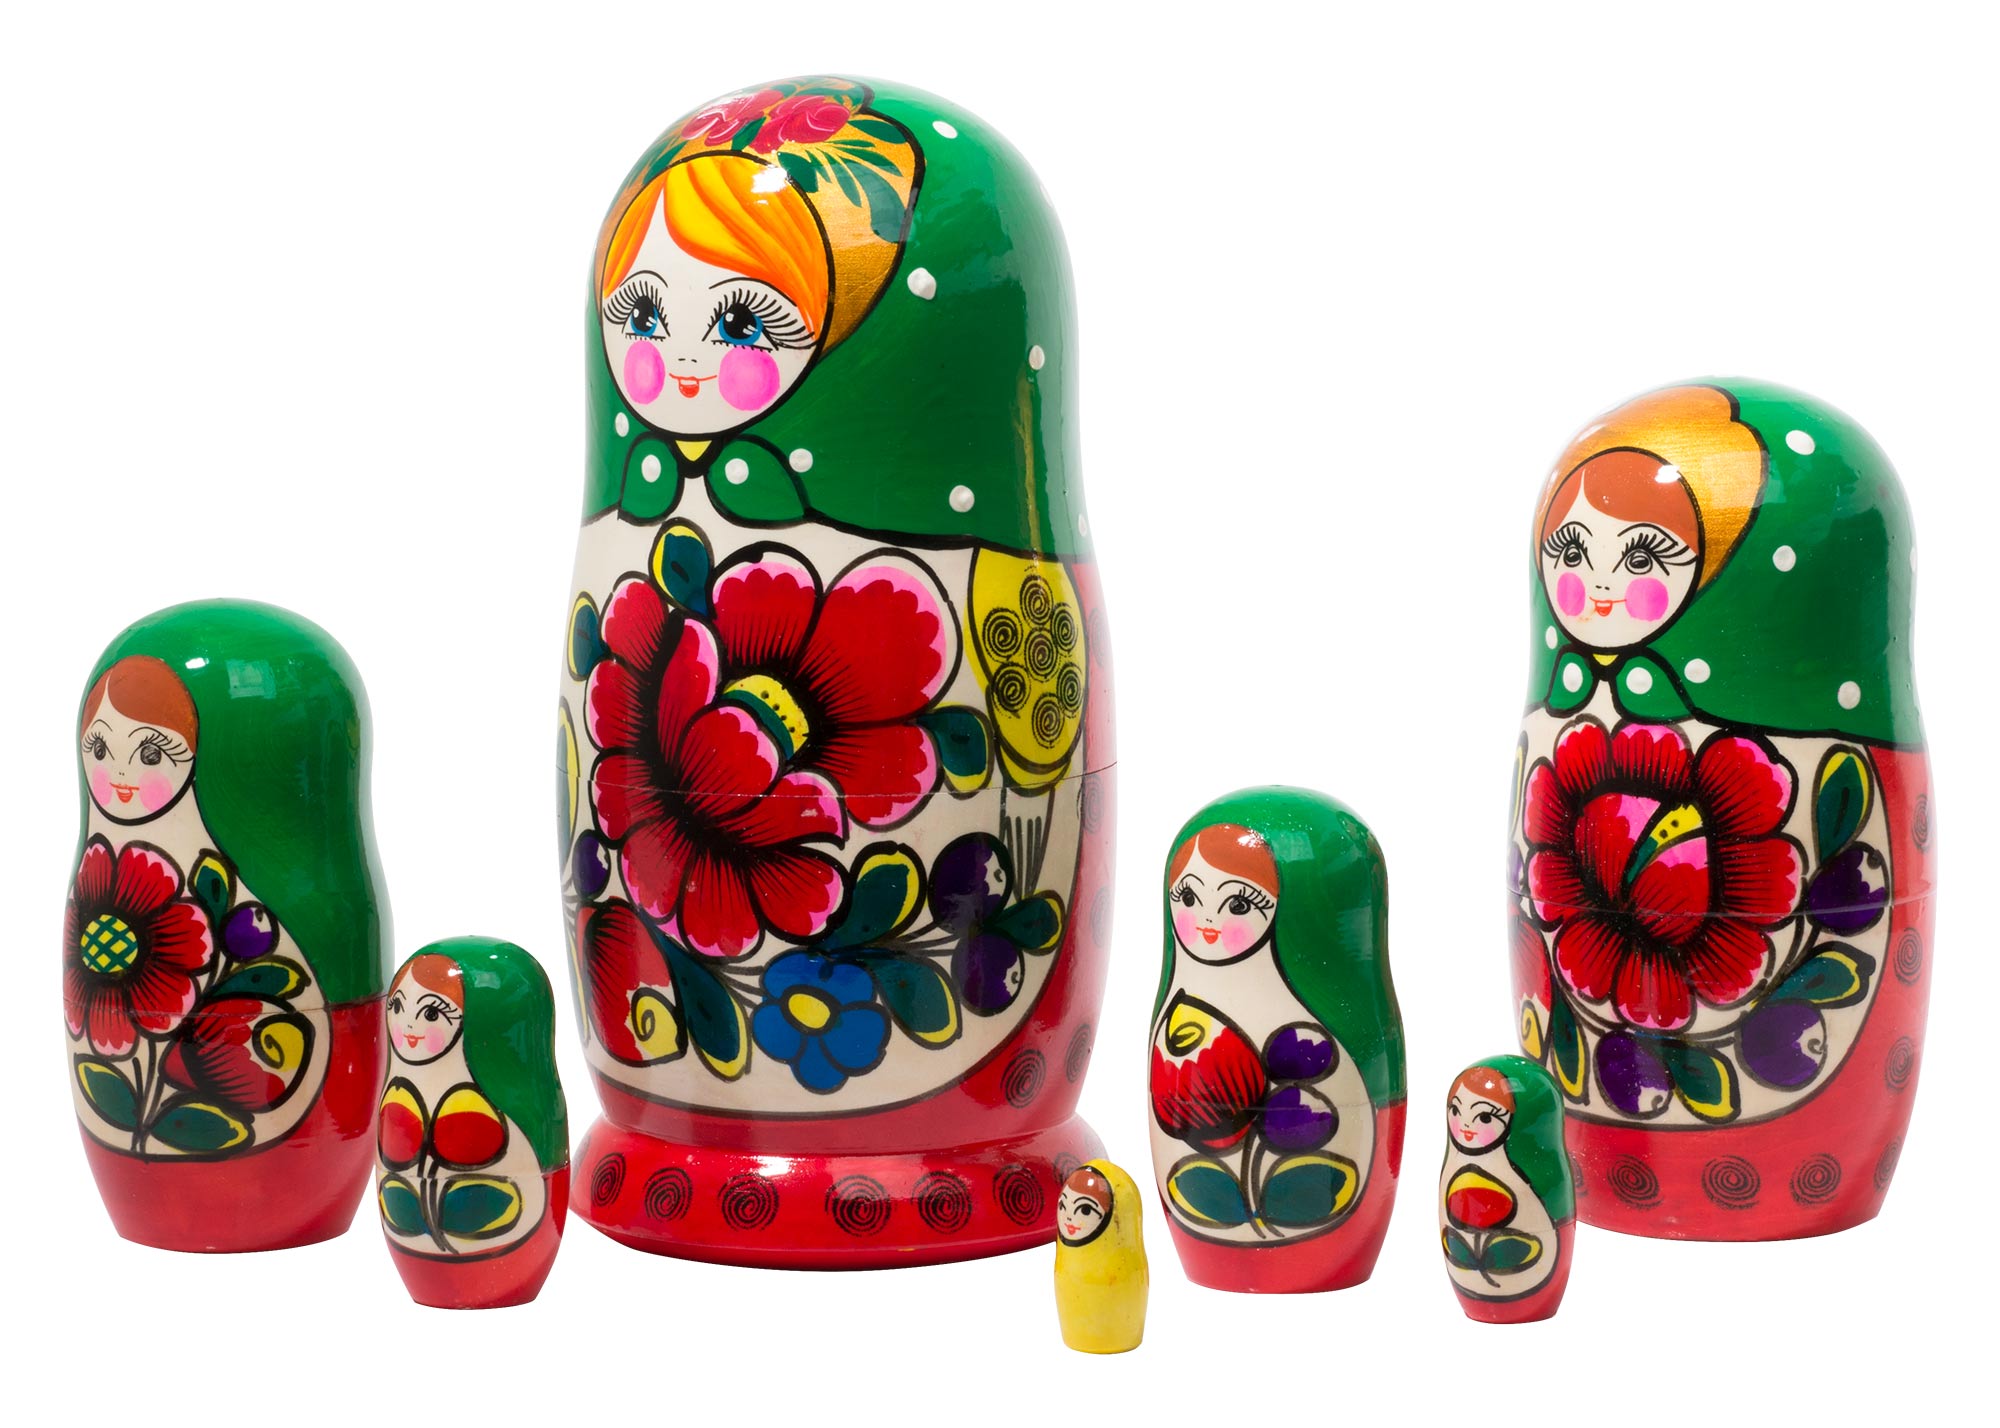 Buy Polkhovski Maidan Doll 7pc./8" at GoldenCockerel.com